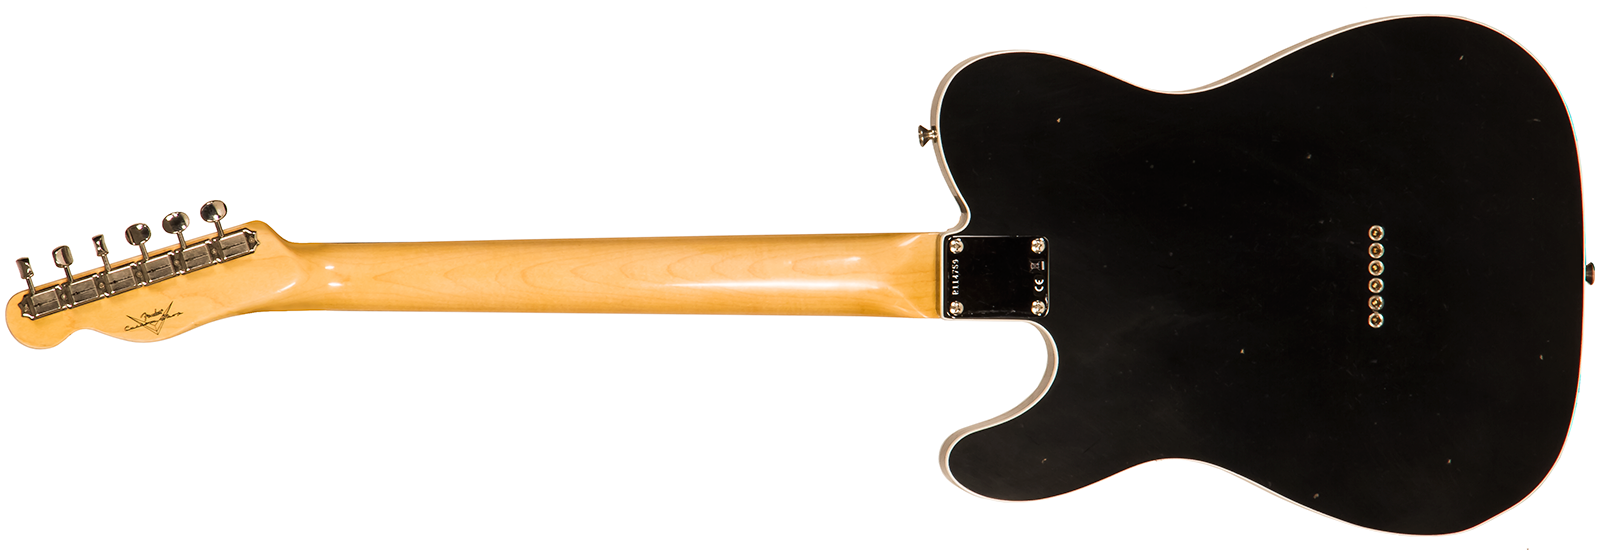 Fender Custom Shop Tele 1960 2s Ht Rw #r114759 - Journeyman Relic Black - E-Gitarre in Teleform - Variation 1